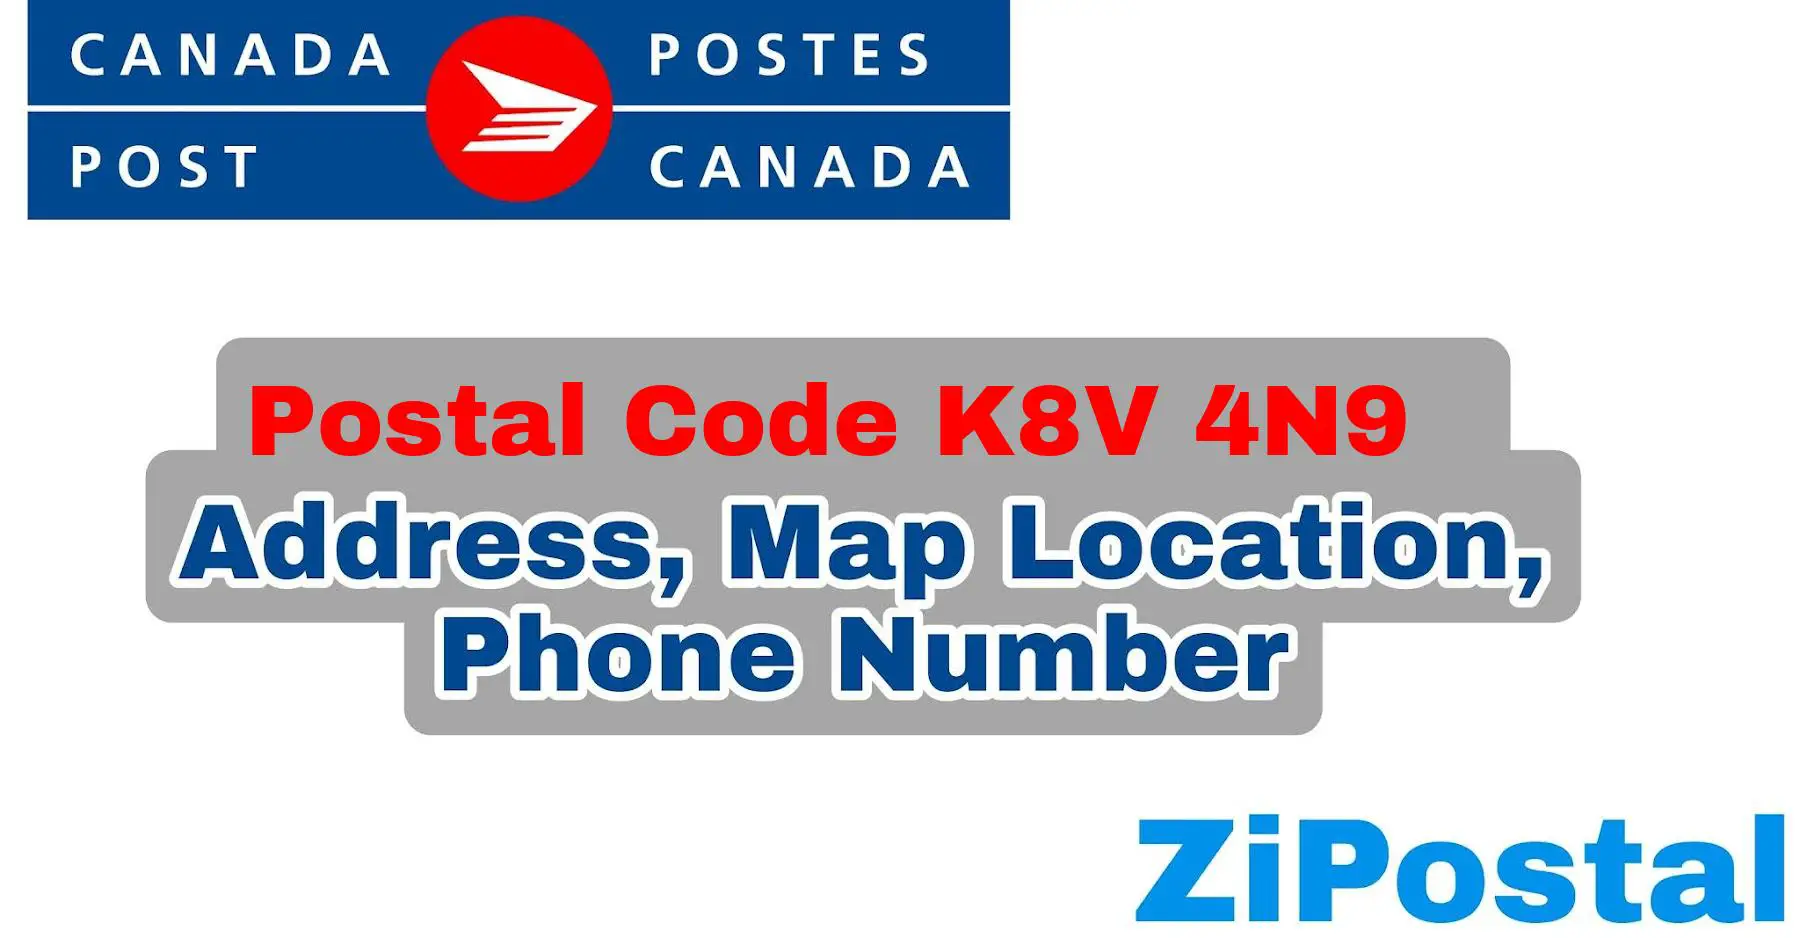 Postal Code K8V 4N9 Address Map Location and Phone Number